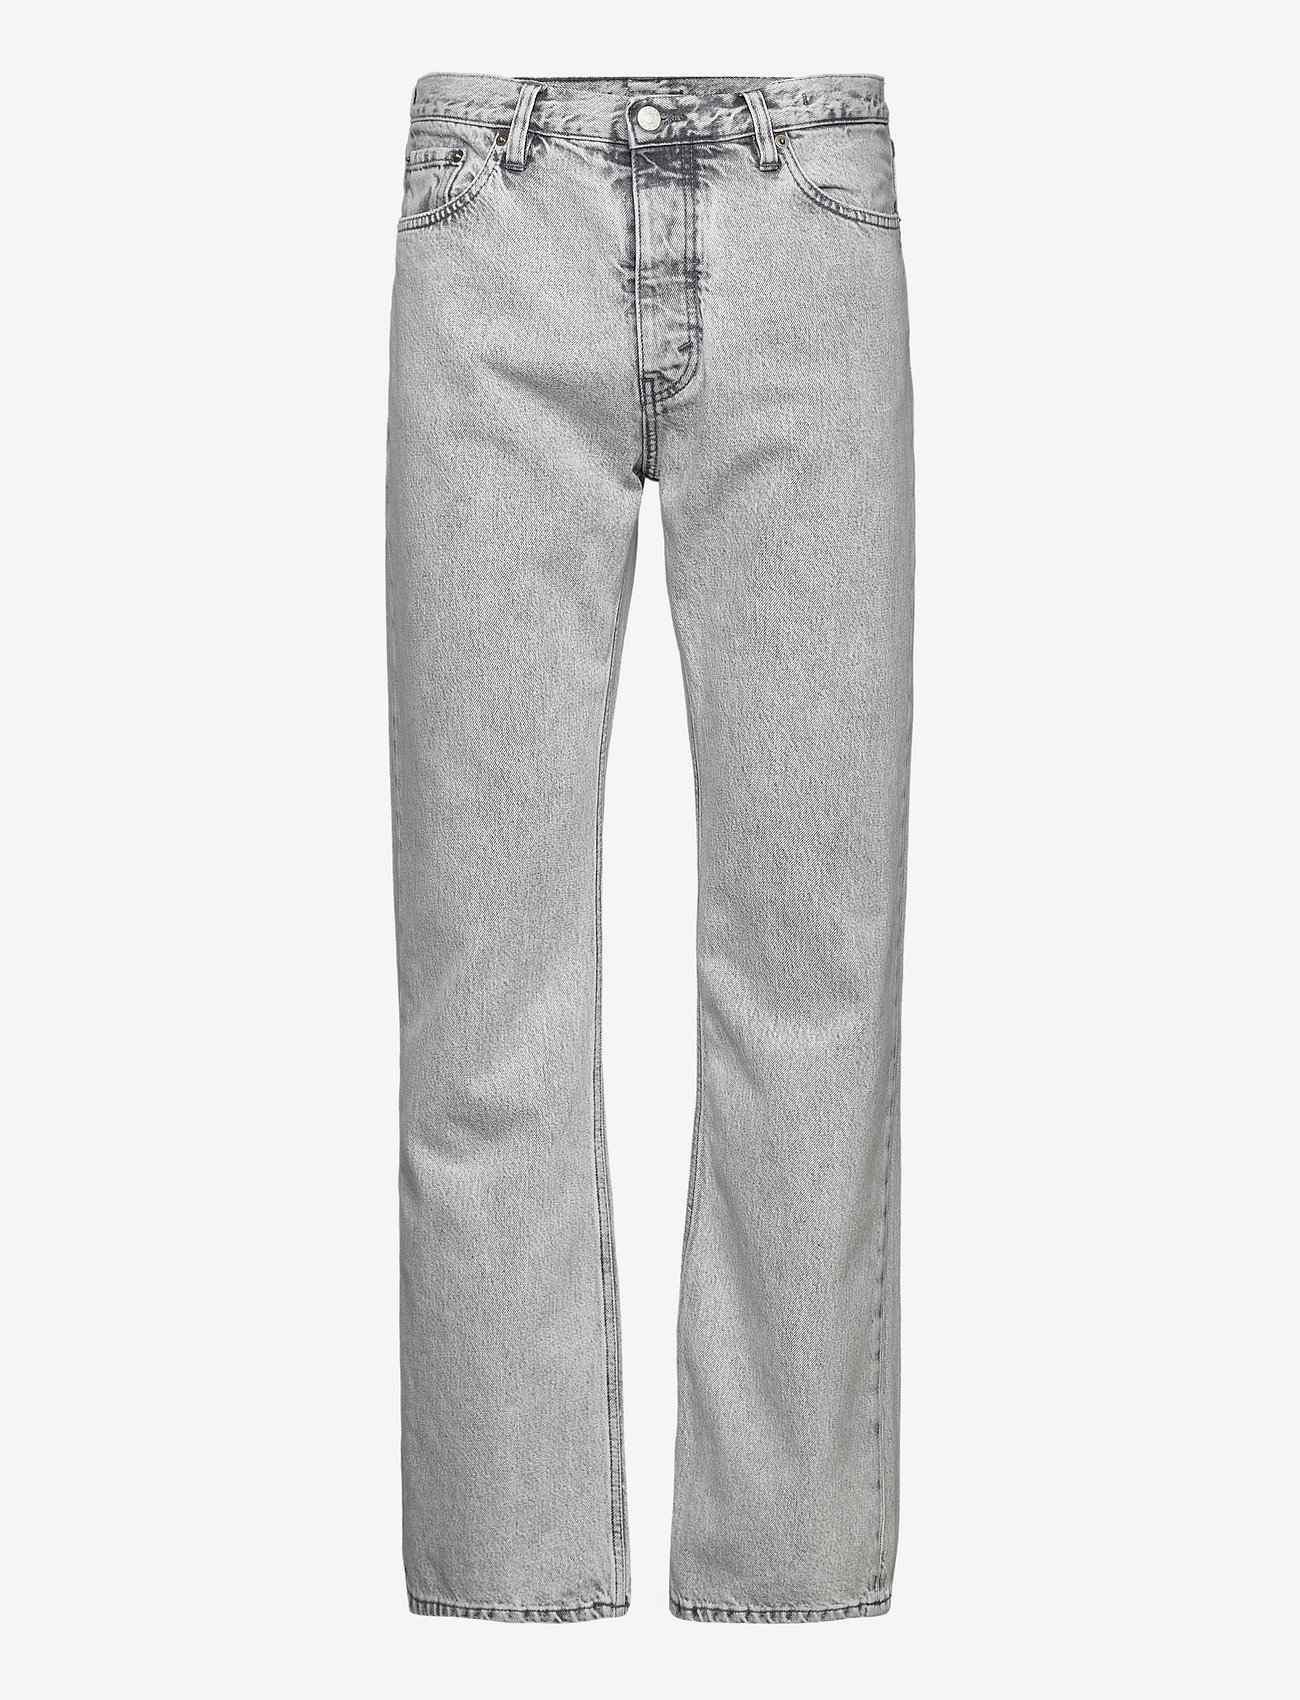 Hope - Rush Jeans Lt Grey Stone - chemises basiques - lt grey stone - 1